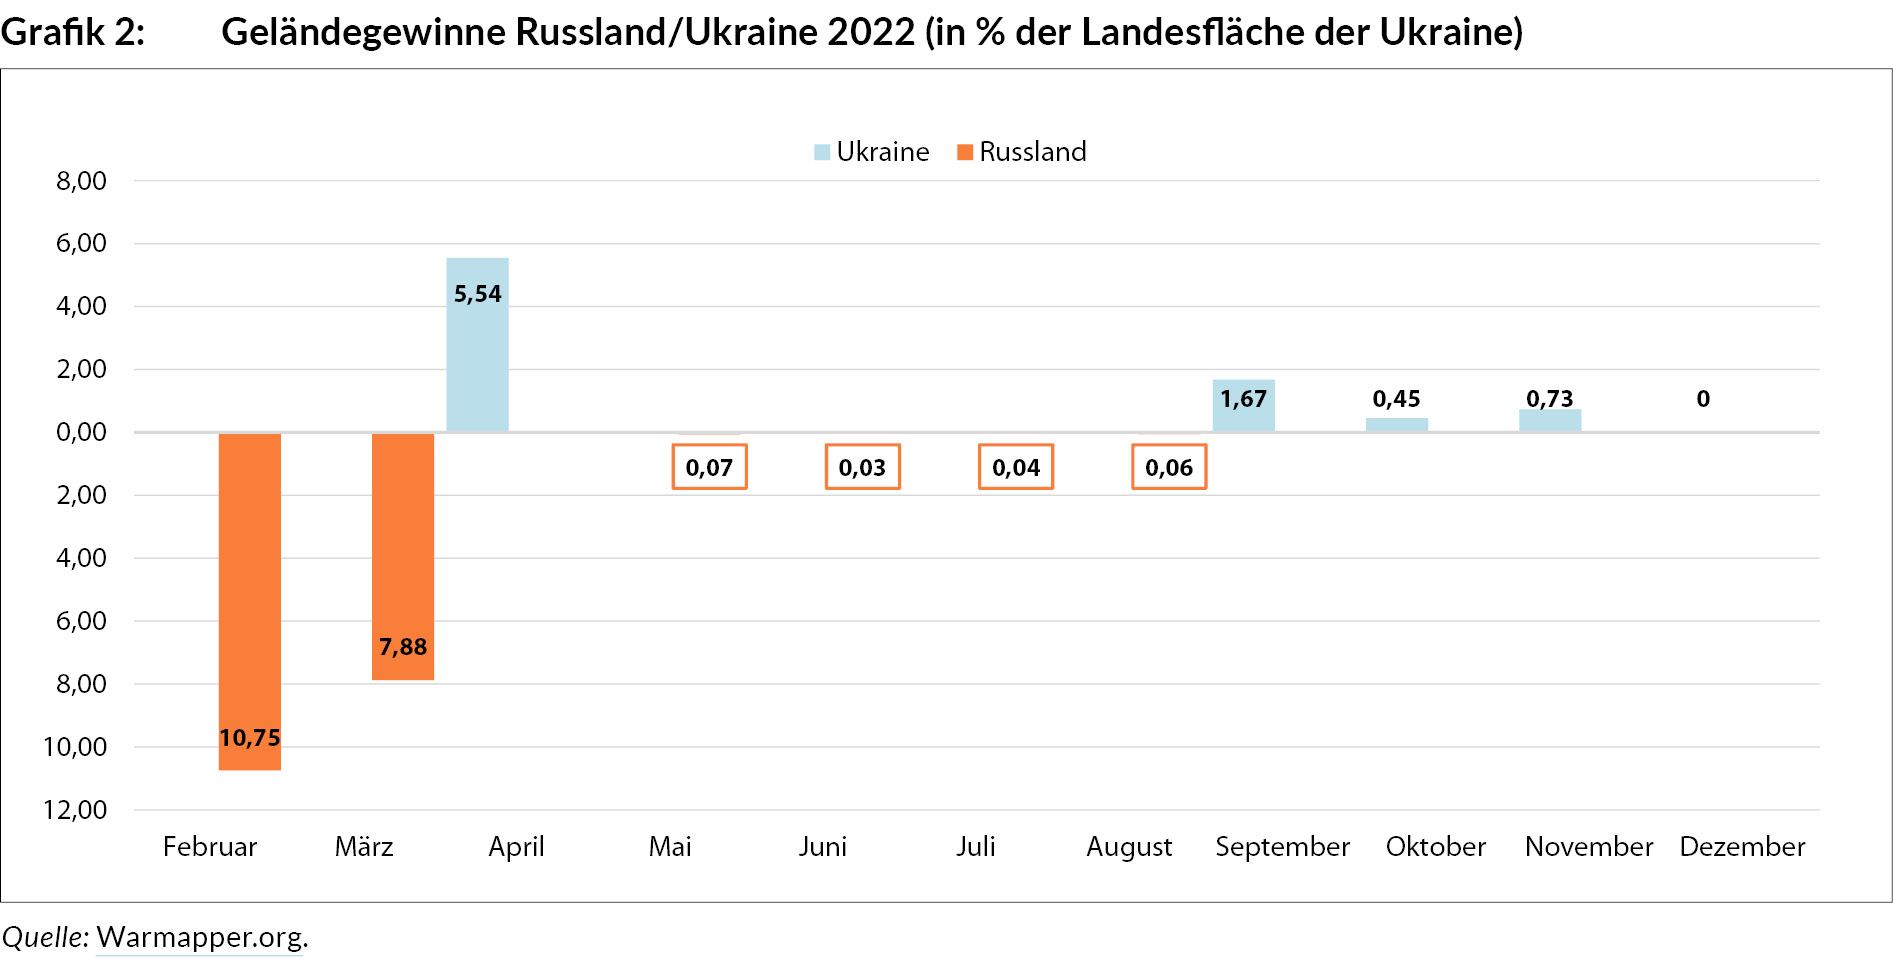 gelaendegewinne_russland_ukraine_2022_grafik_ua292_2-1.jpg